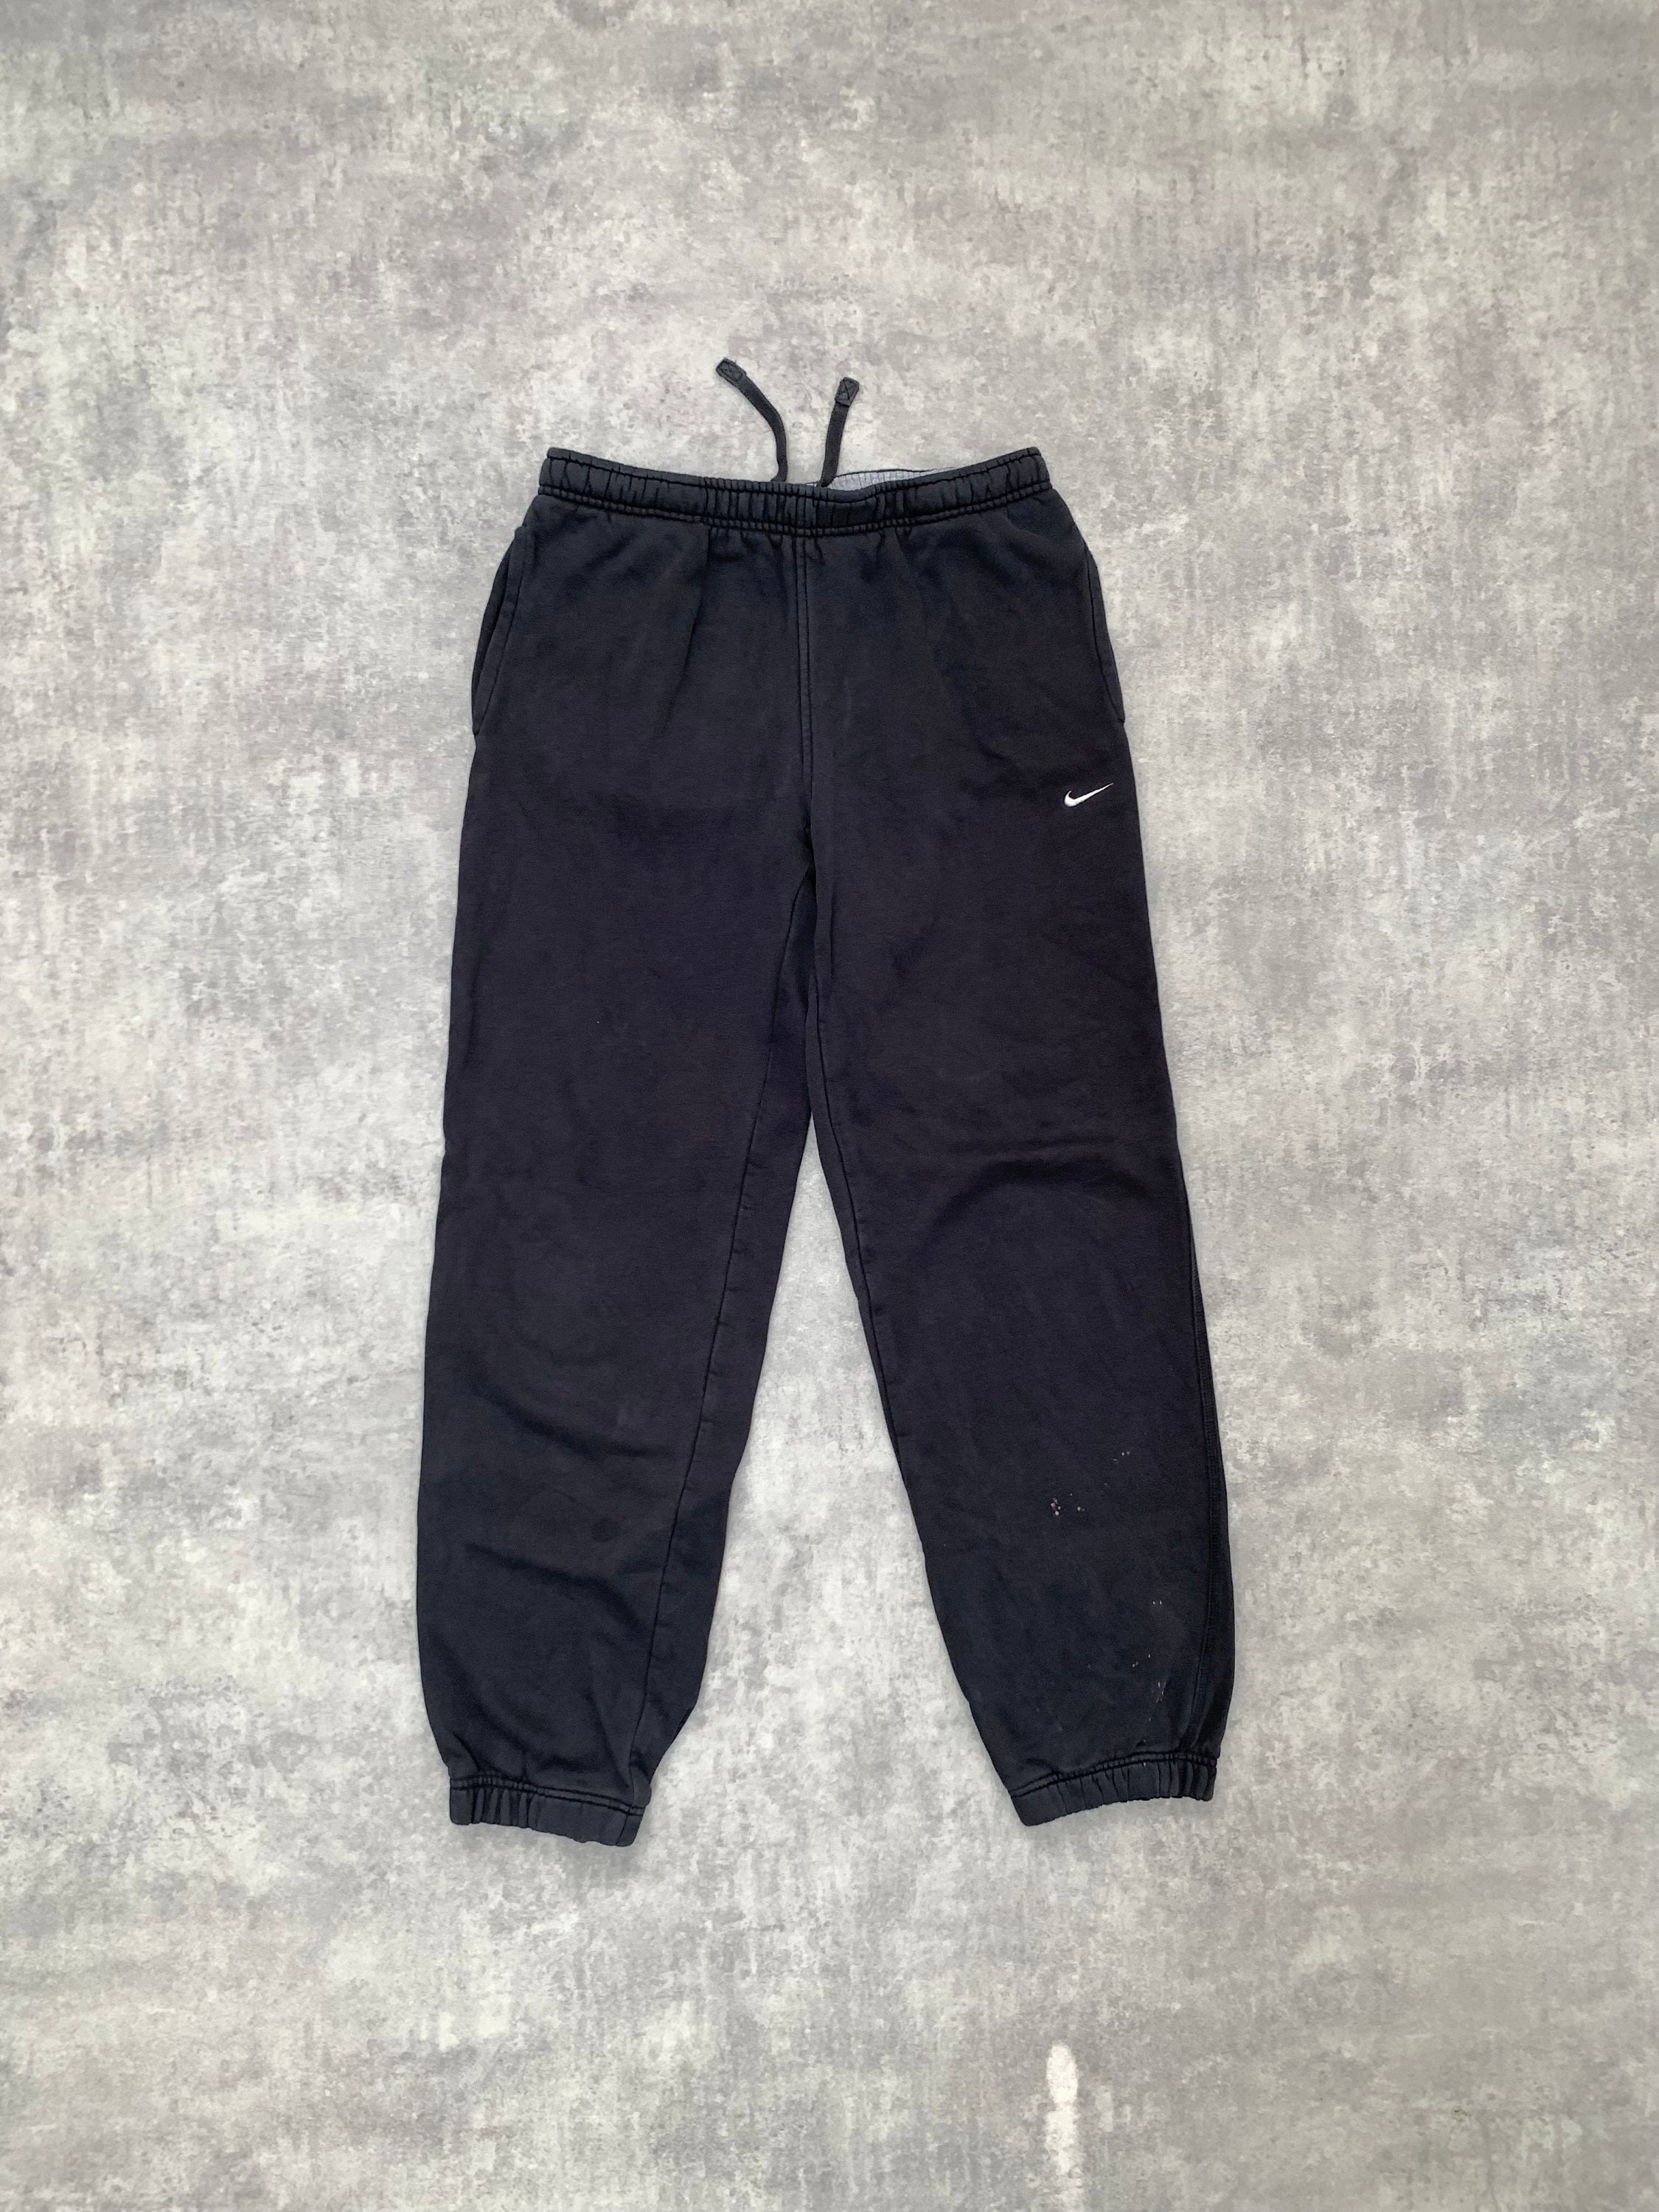 90s Nike Sweatpants -  Canada